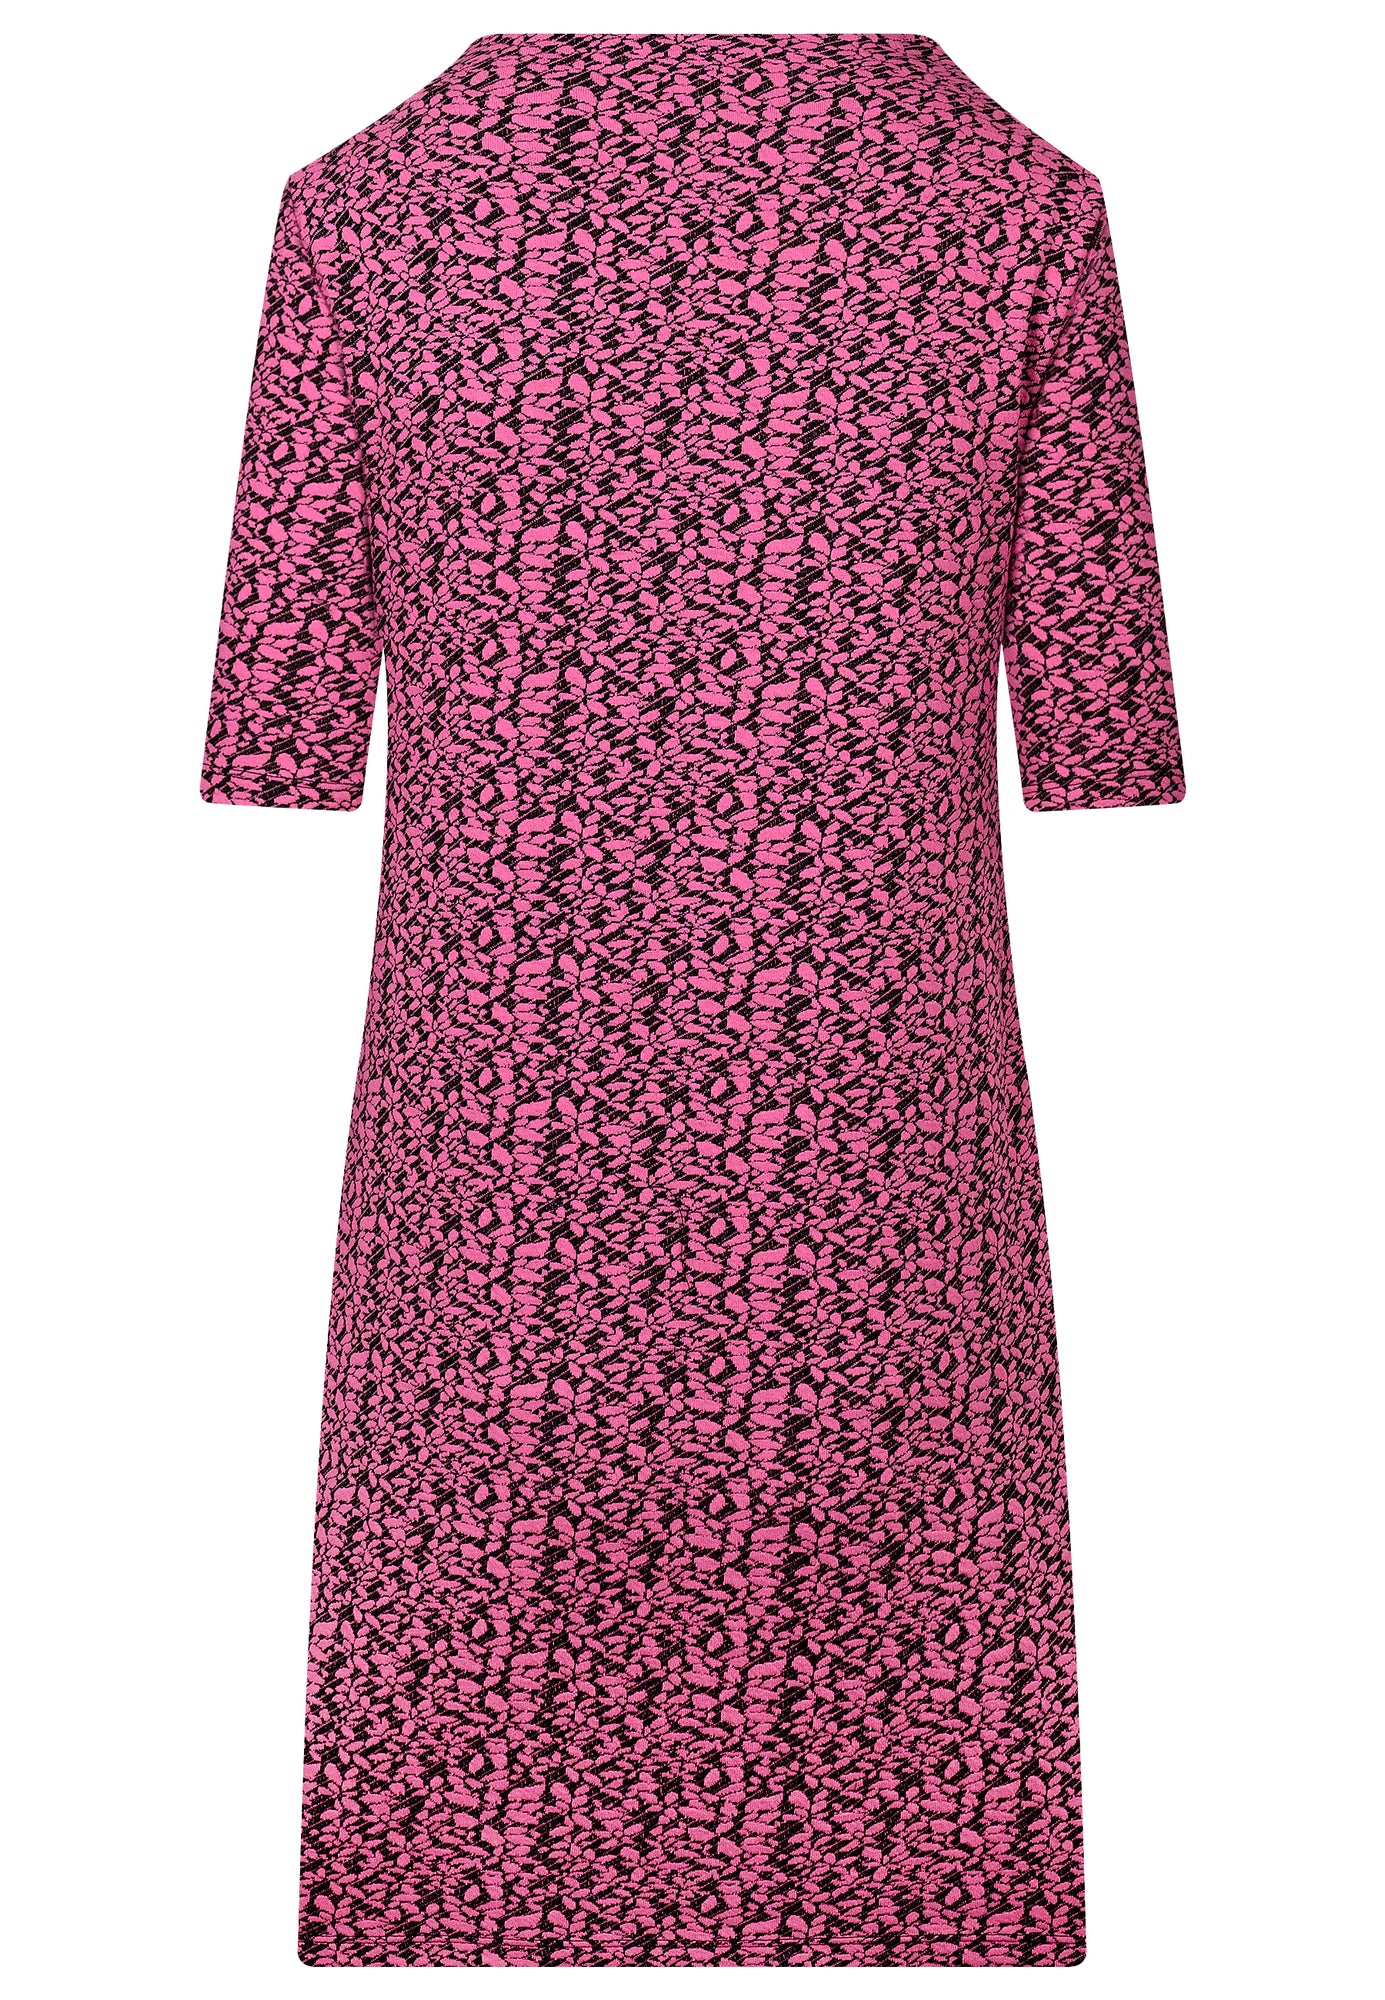 24234 Dress Jacquard - 09/pink-black